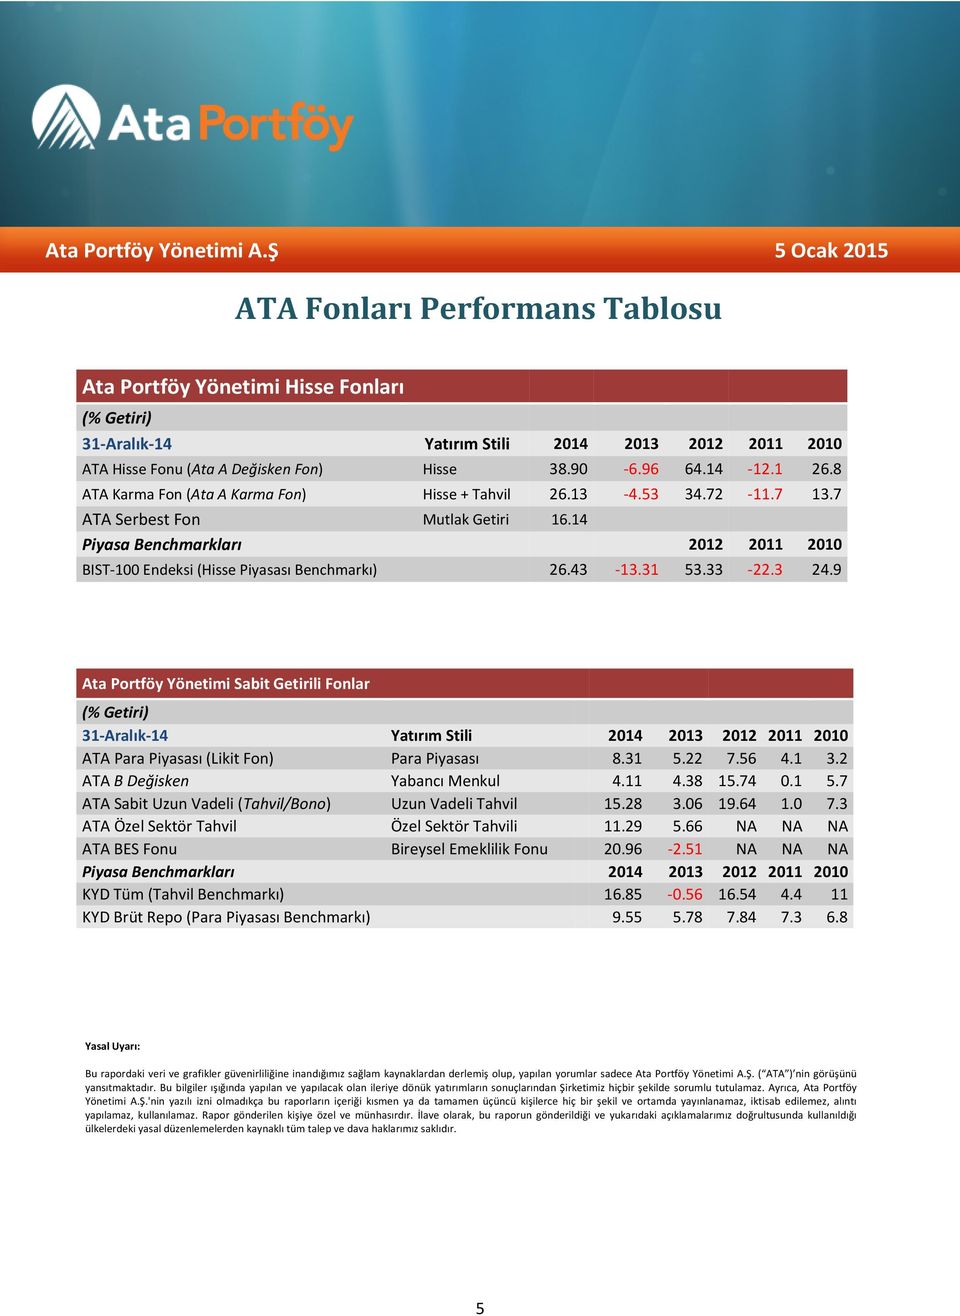 31 53.33-22.3 24.9 Ata Portföy Yönetimi Sabit Getirili Fonlar (% Getiri) 31-Aralık-14 Yatırım Stili 2014 2013 2012 2011 2010 ATA Para Piyasası (Likit Fon) Para Piyasası 8.31 5.22 7.56 4.1 3.